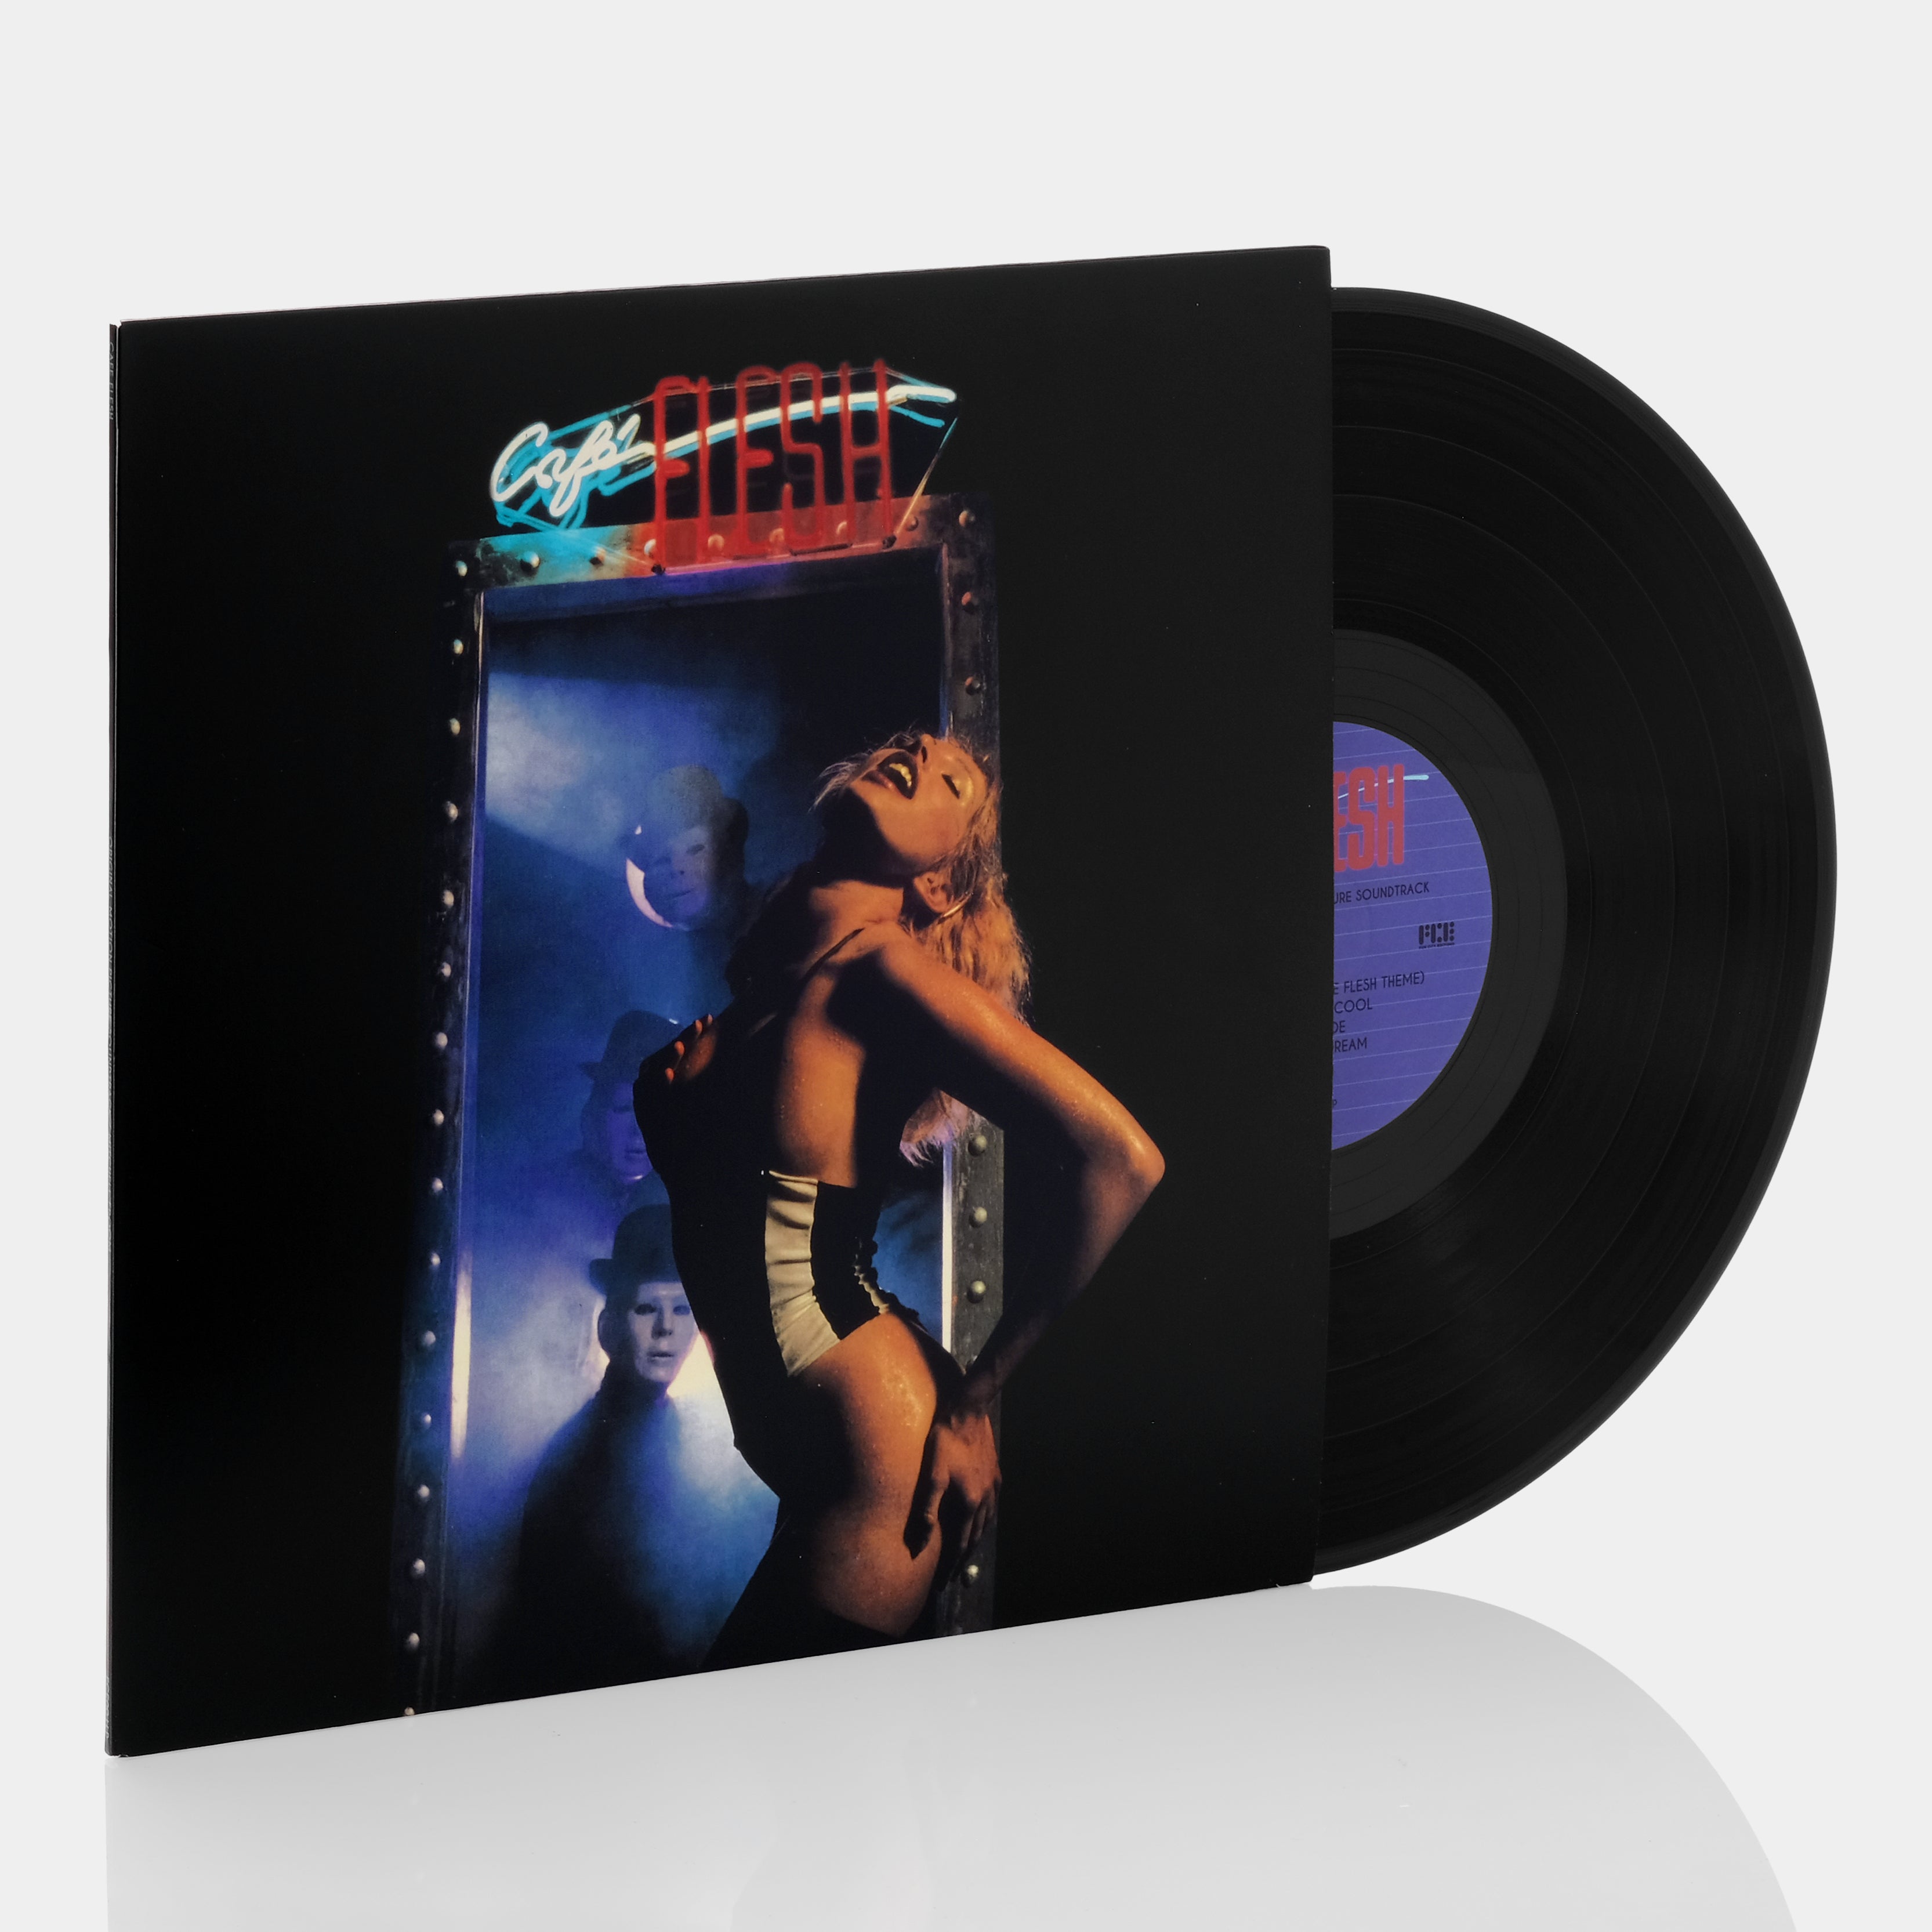 Mitchell Froom - Cafe Flesh (Original Motion Picture Soundtrack) LP Vinyl Record